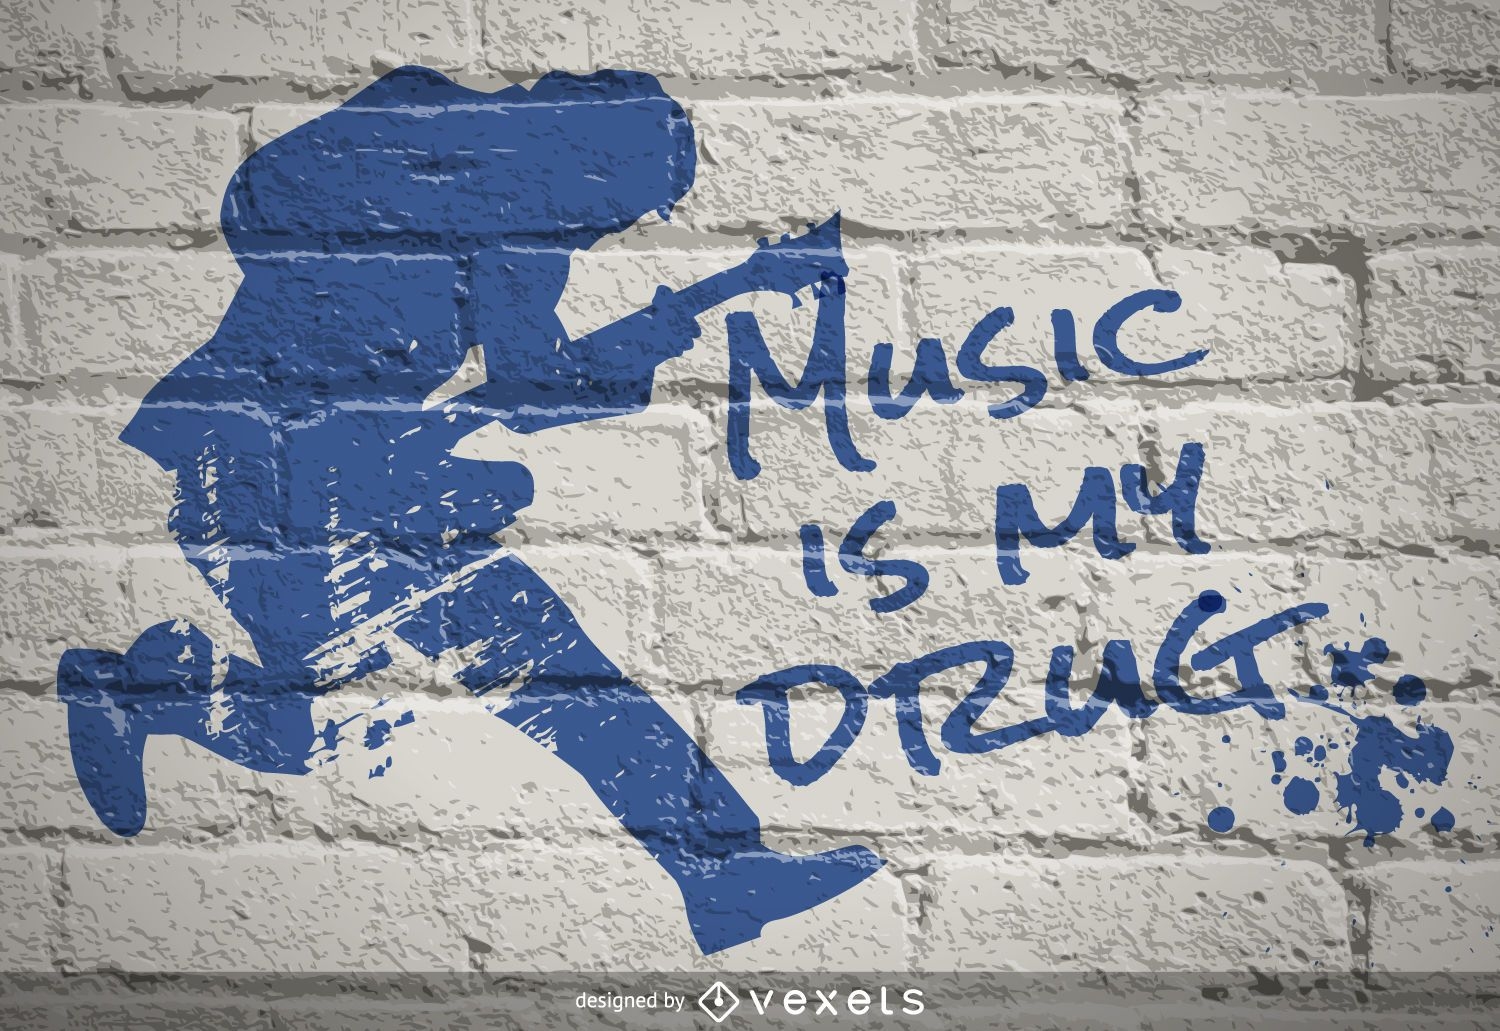 Music is my drug graffiti